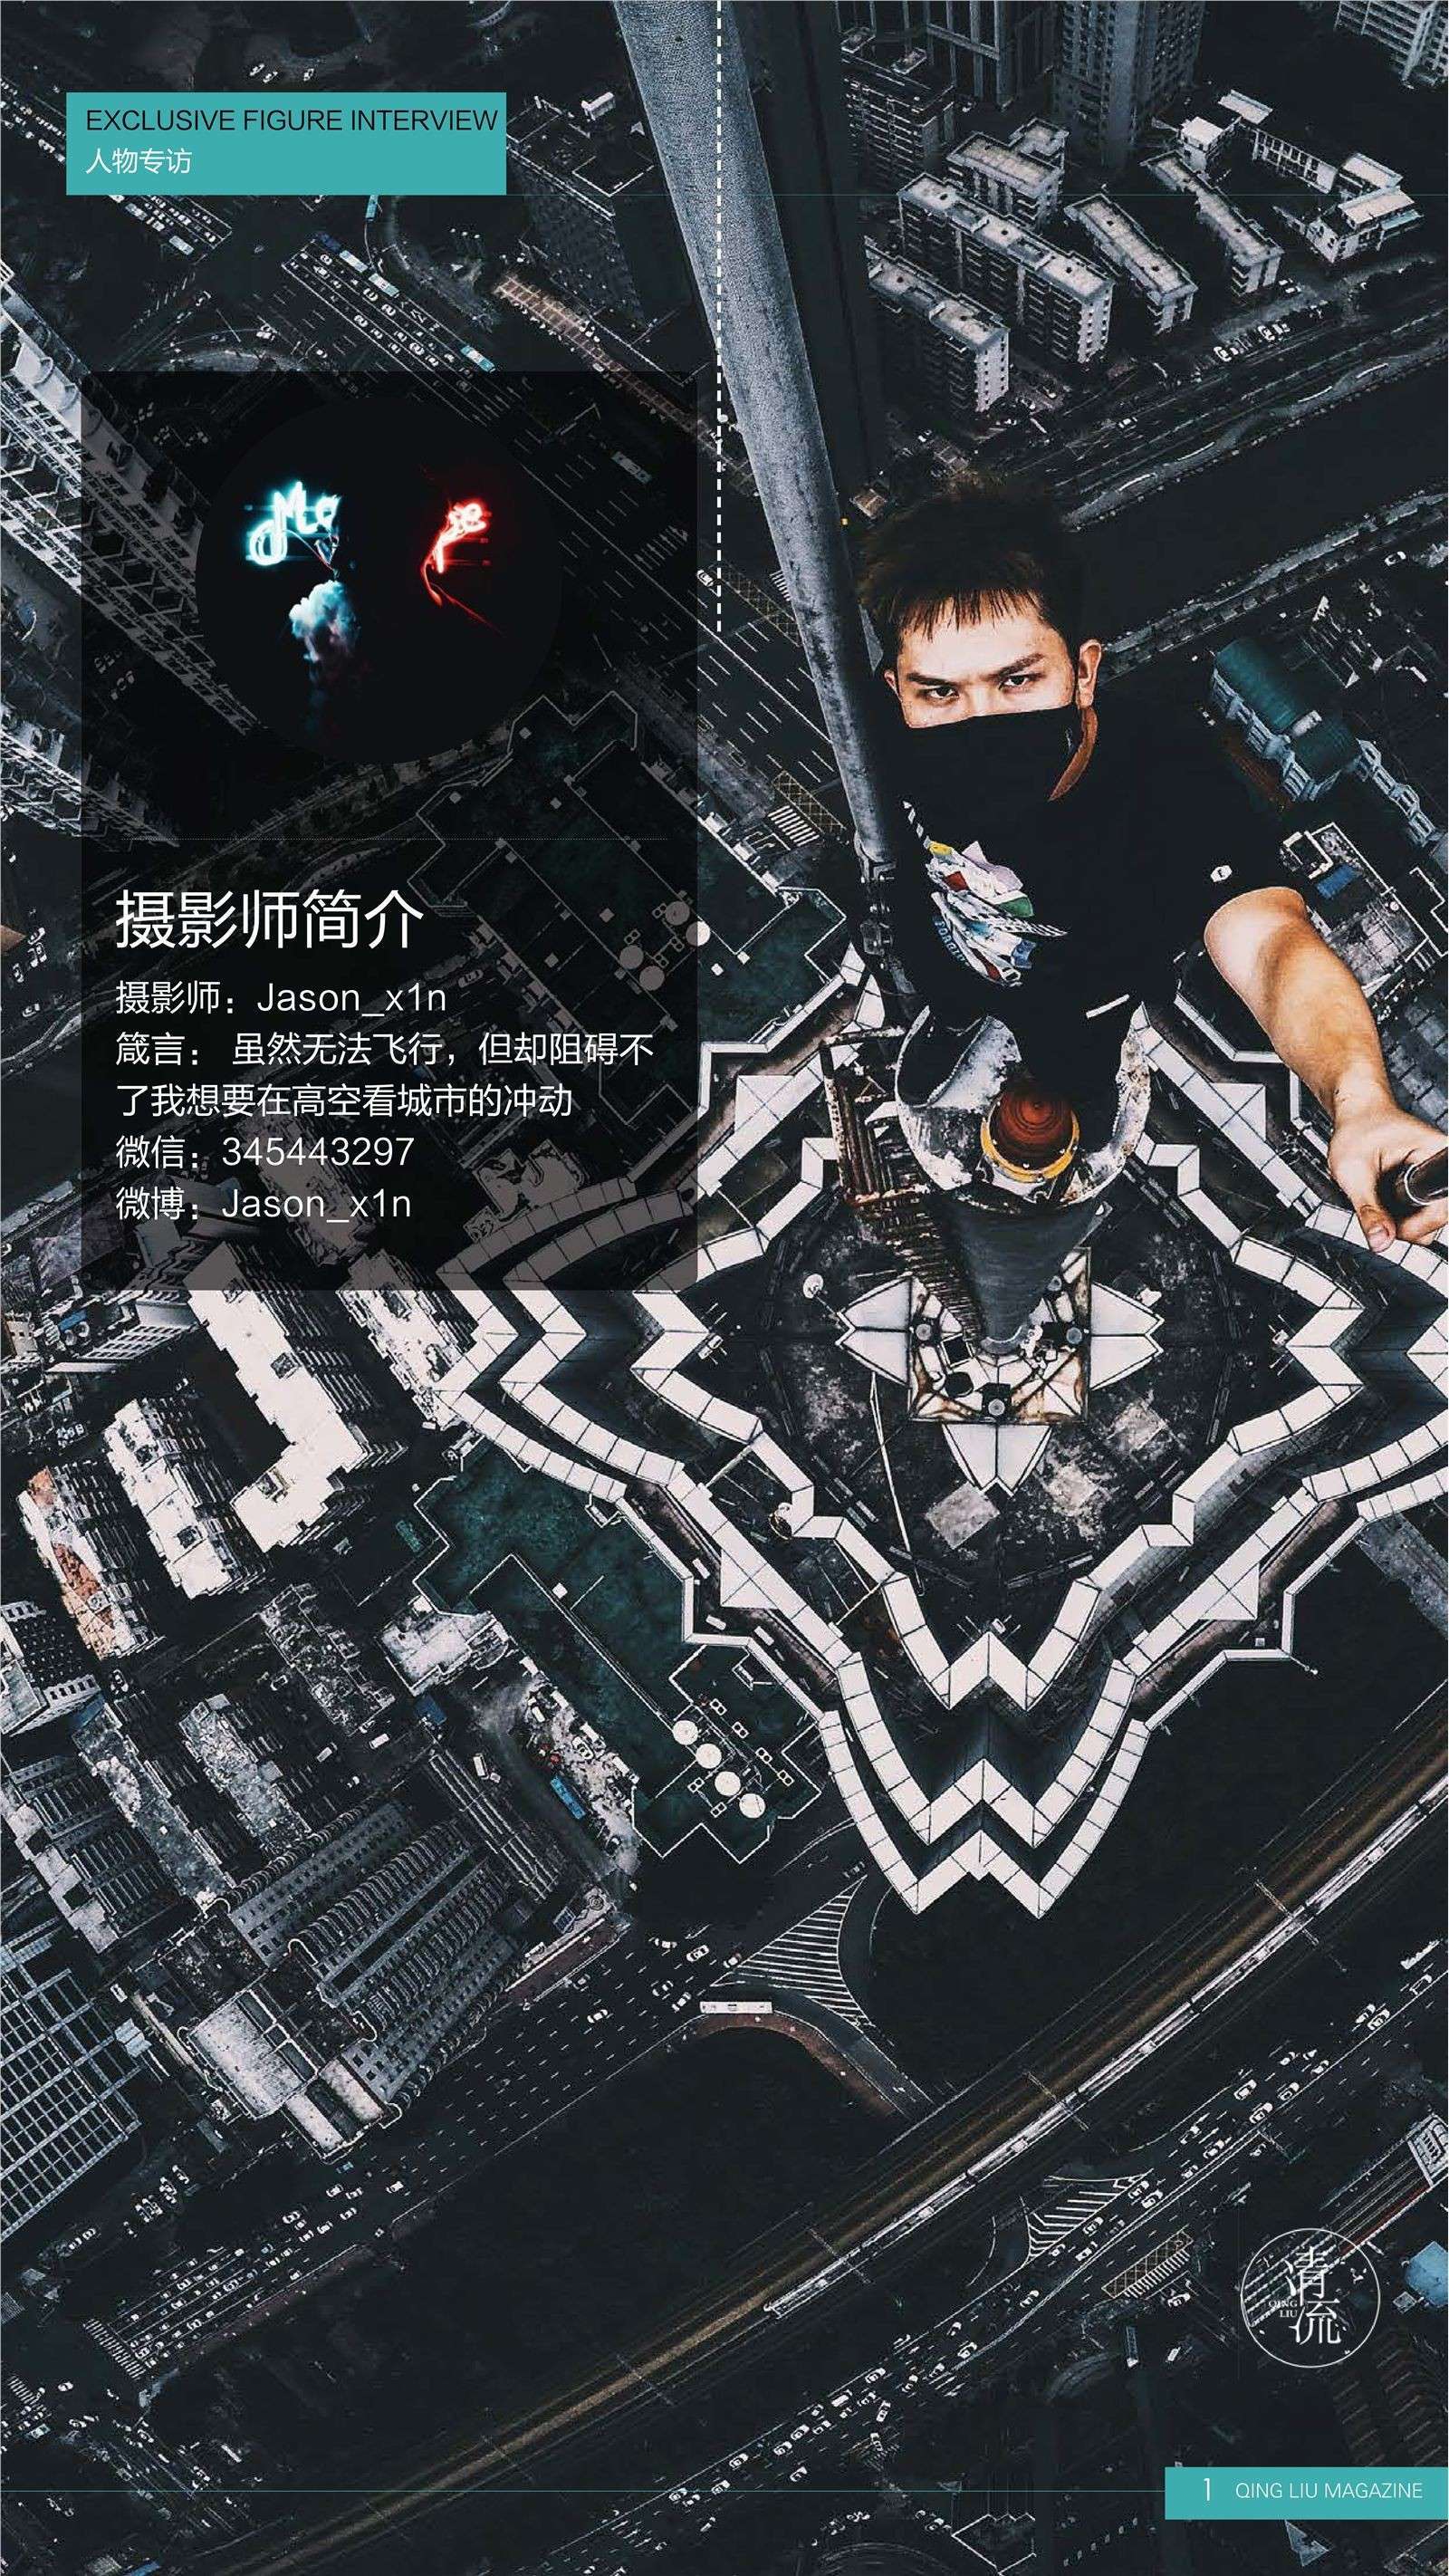 Qingliu, September 15, 2017, issue 3